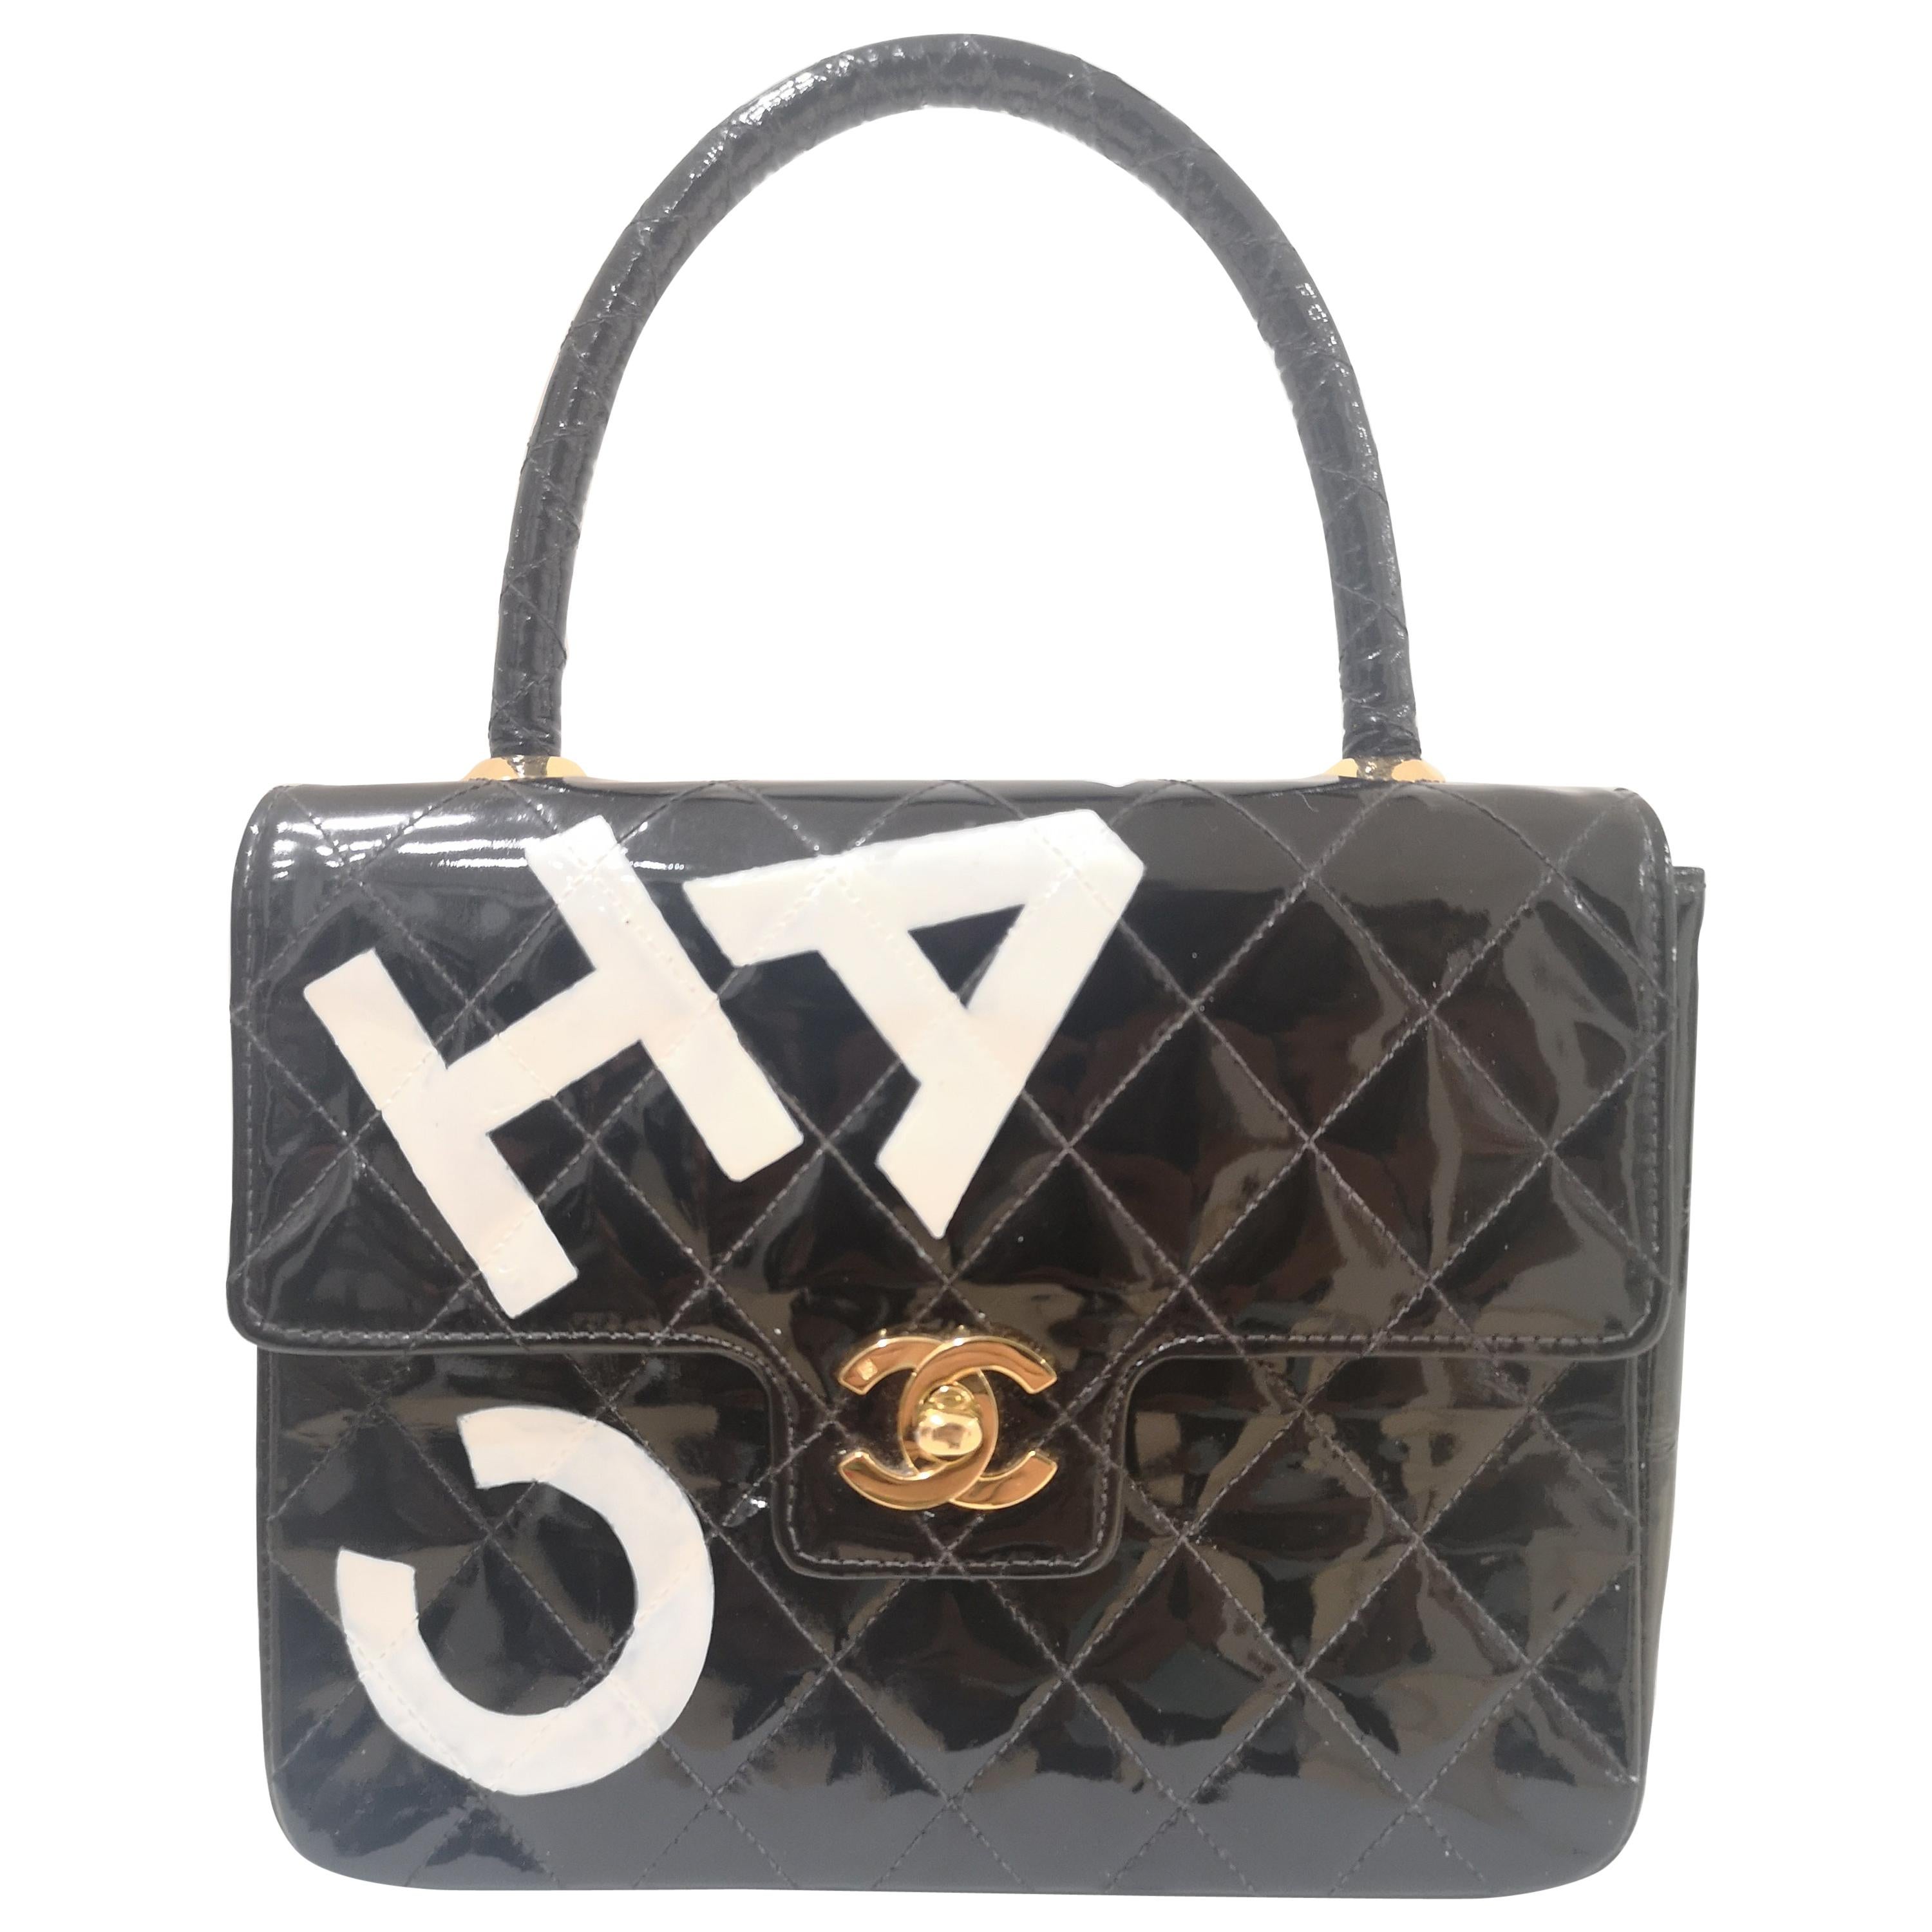 Chanel black patent leather handbag 